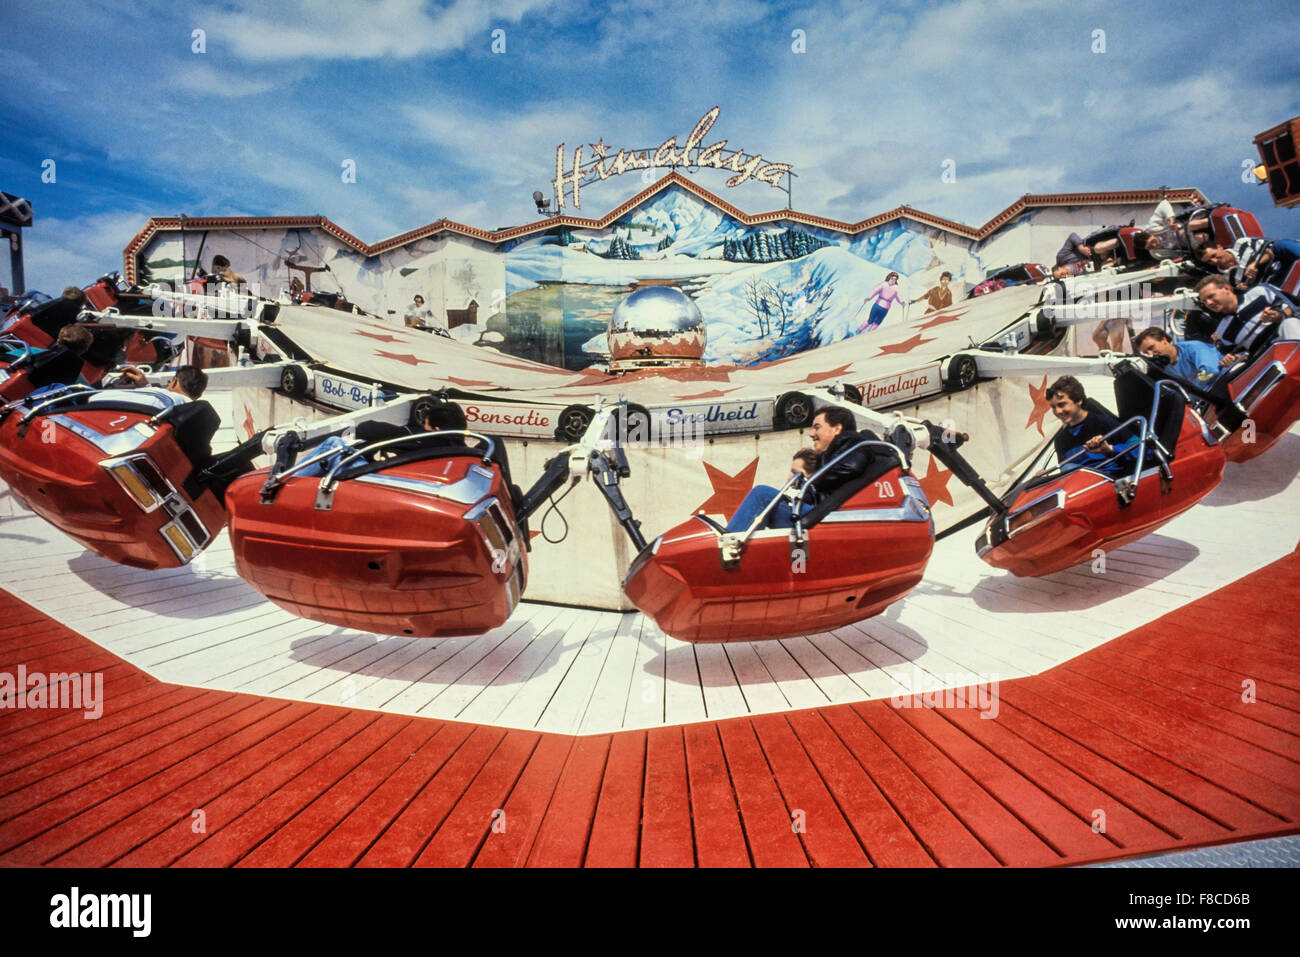 Himalaya ride. Southport Pleasureland. Merseyside. England. UK. Circa 1980's Stock Photo